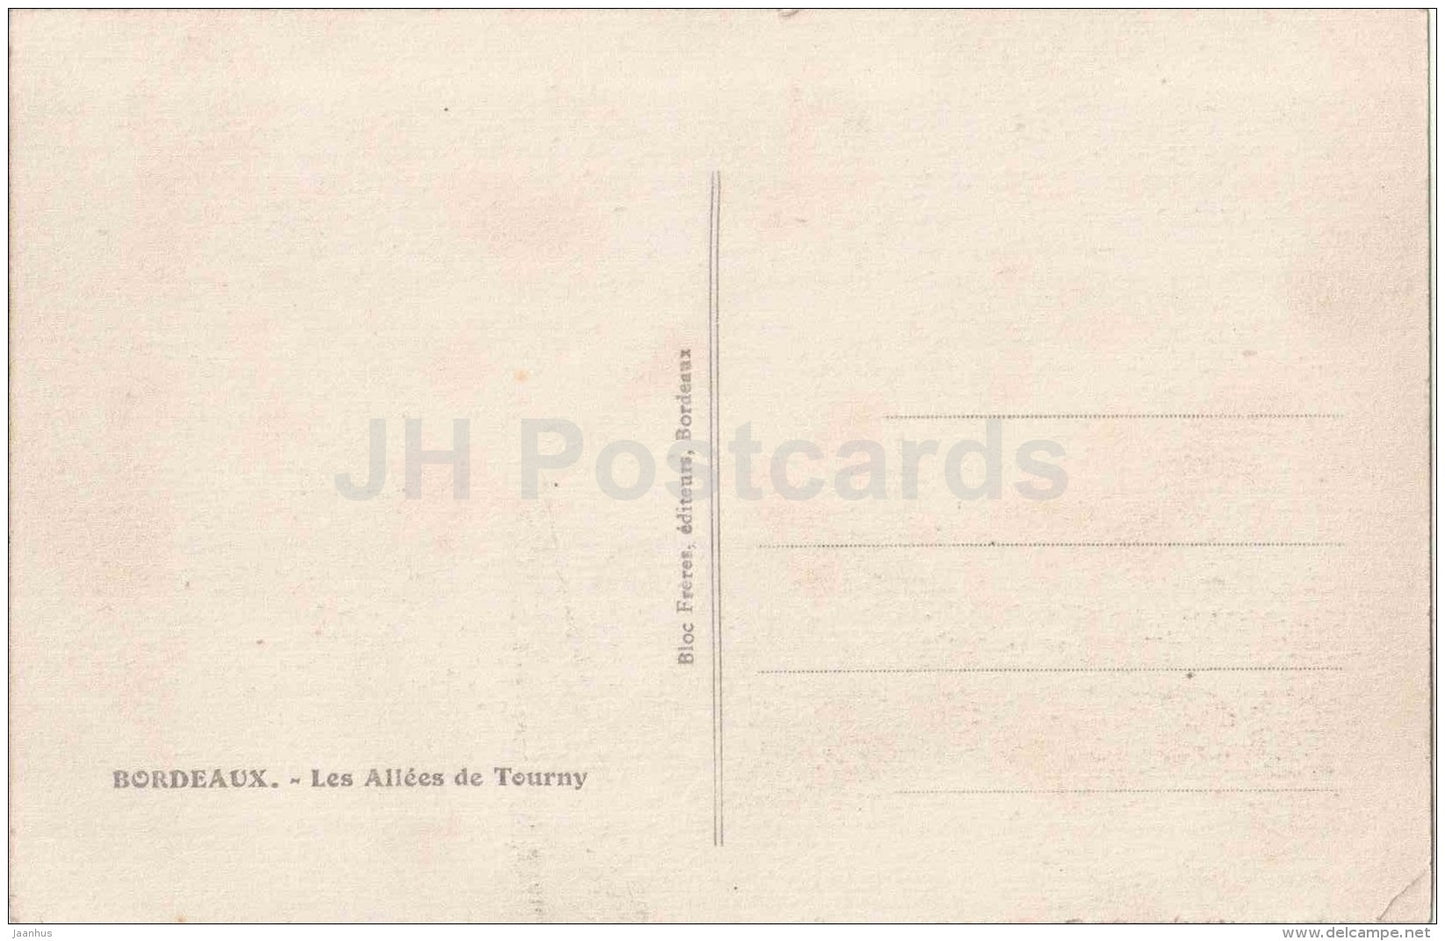 Les Allees de Tourny - Tito - Bordeaux - France - old postcard - unused - JH Postcards